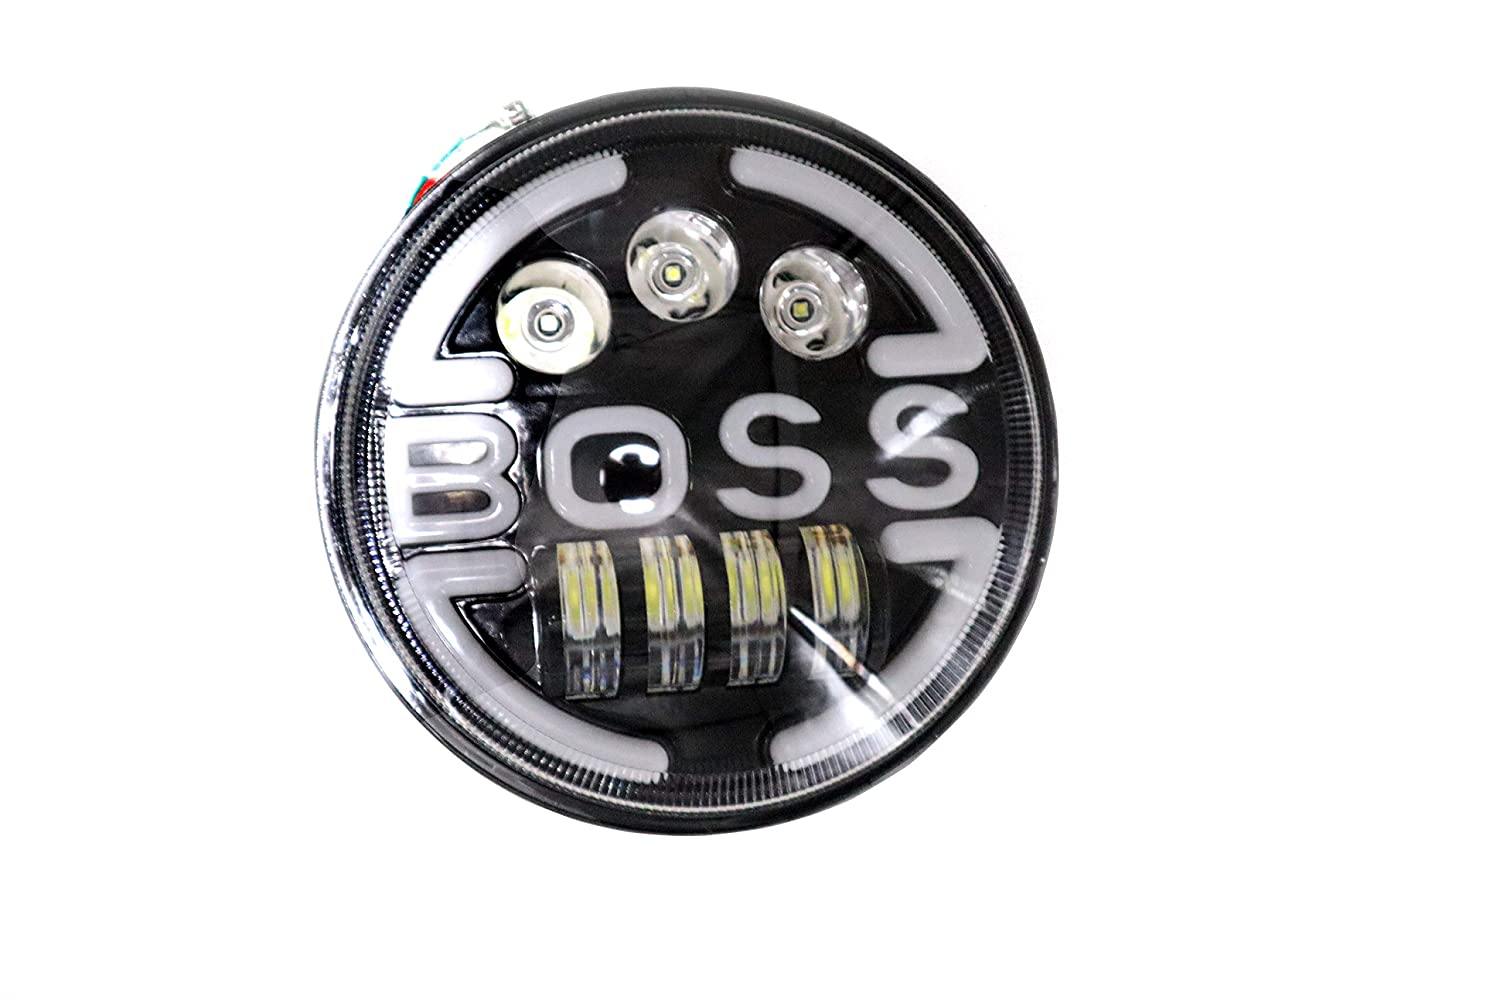 BOSS Headlight-7 Inch (6 Months Warranty) - Premium Headlights from Sparewick - Just Rs. 3100! Shop now at Sparewick